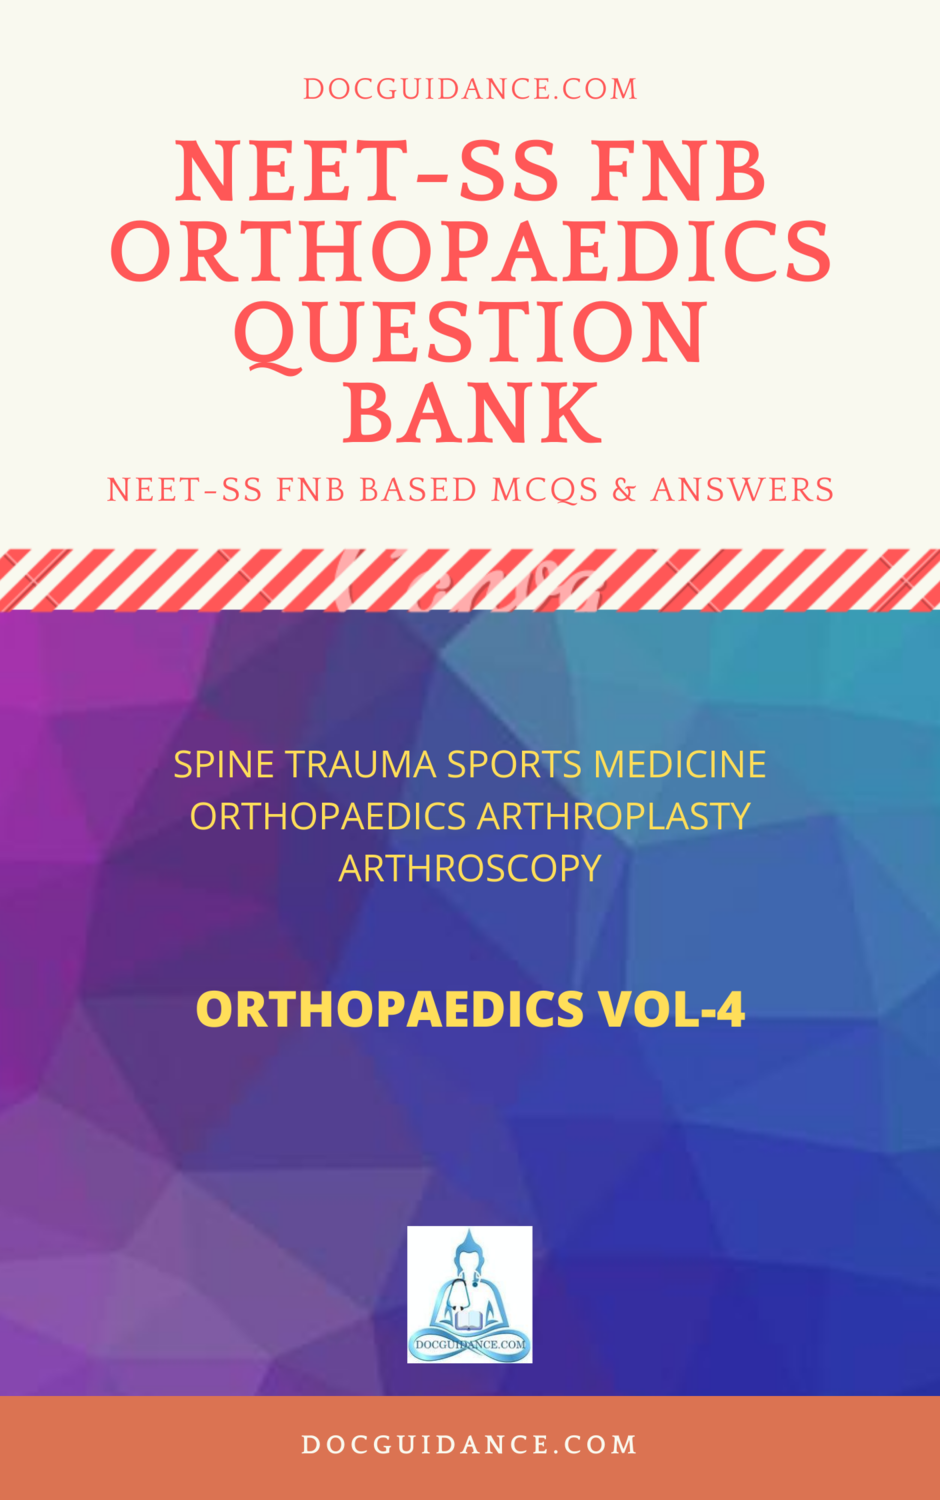 FNB FET NEET SS Questionbank Spine Trauma Sports Medicine hand Vol 4